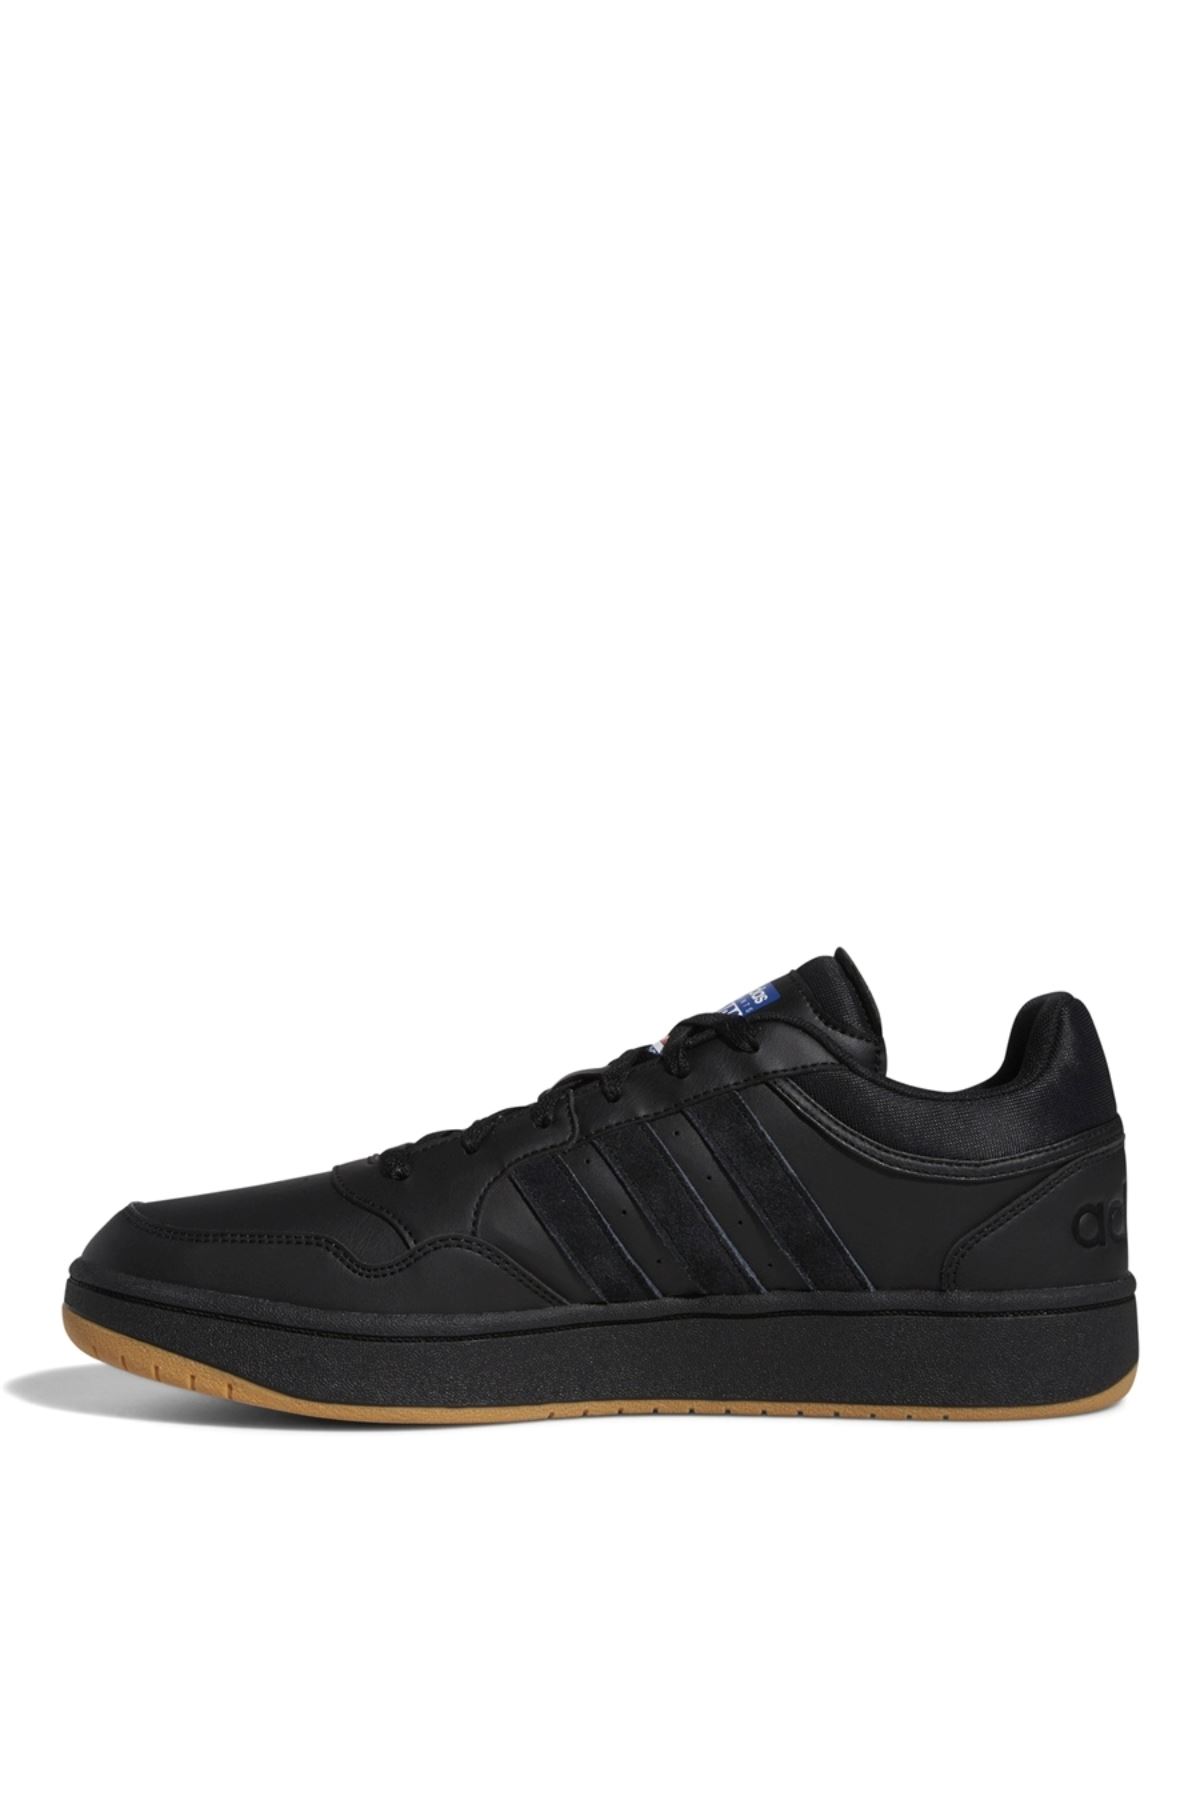 Adidas Hoops 3.0 Erkek Siyah Spor Ayakkabı - GY4727